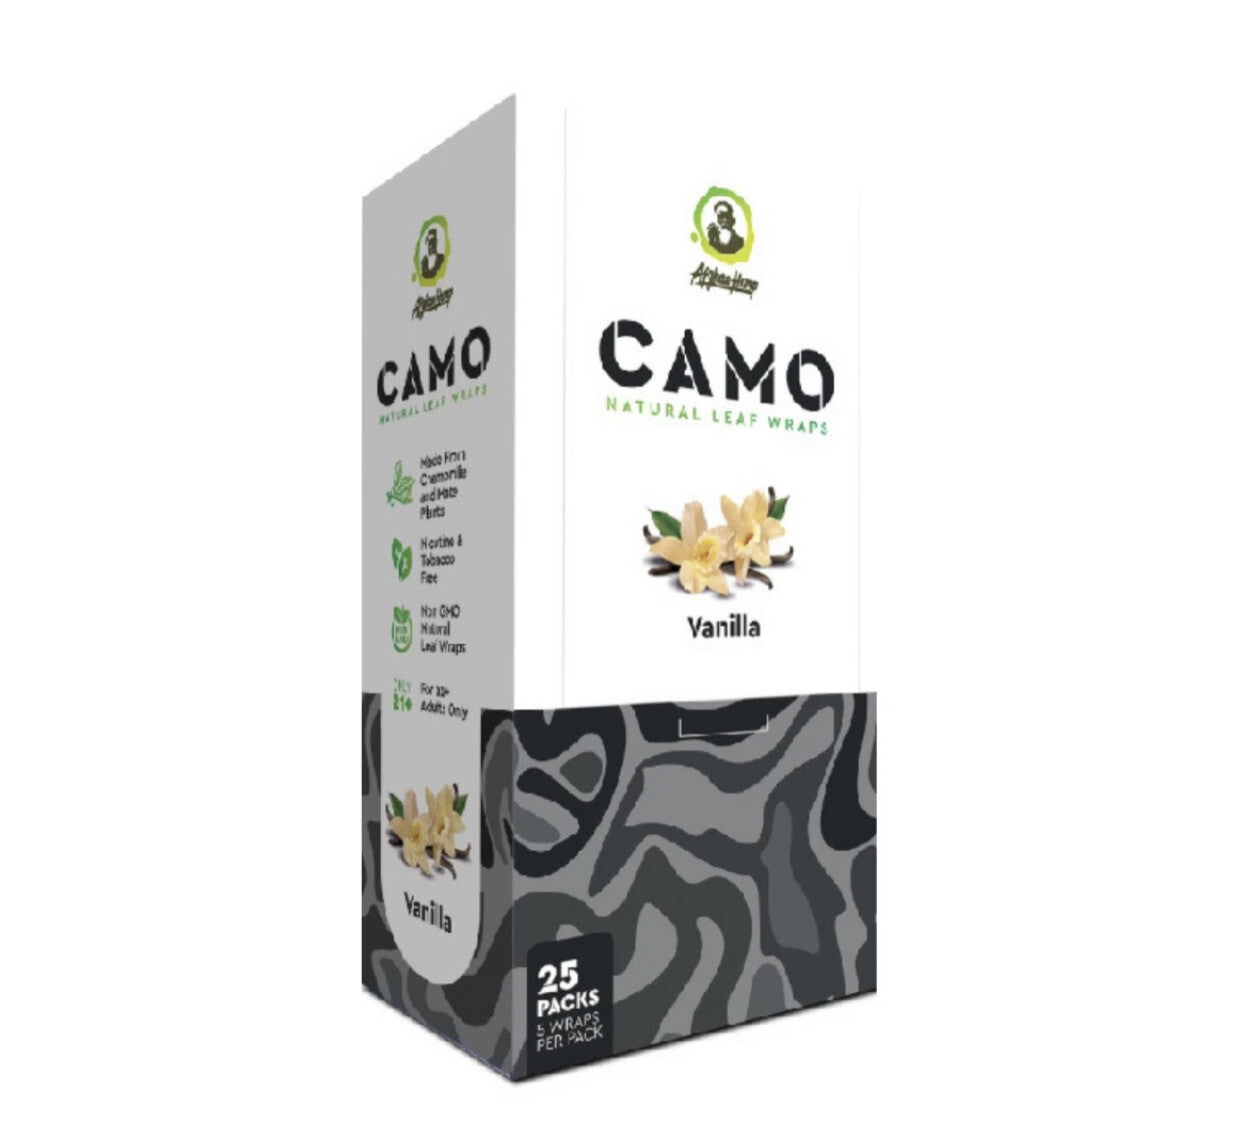 Envolturas de hojas naturales de CAMO